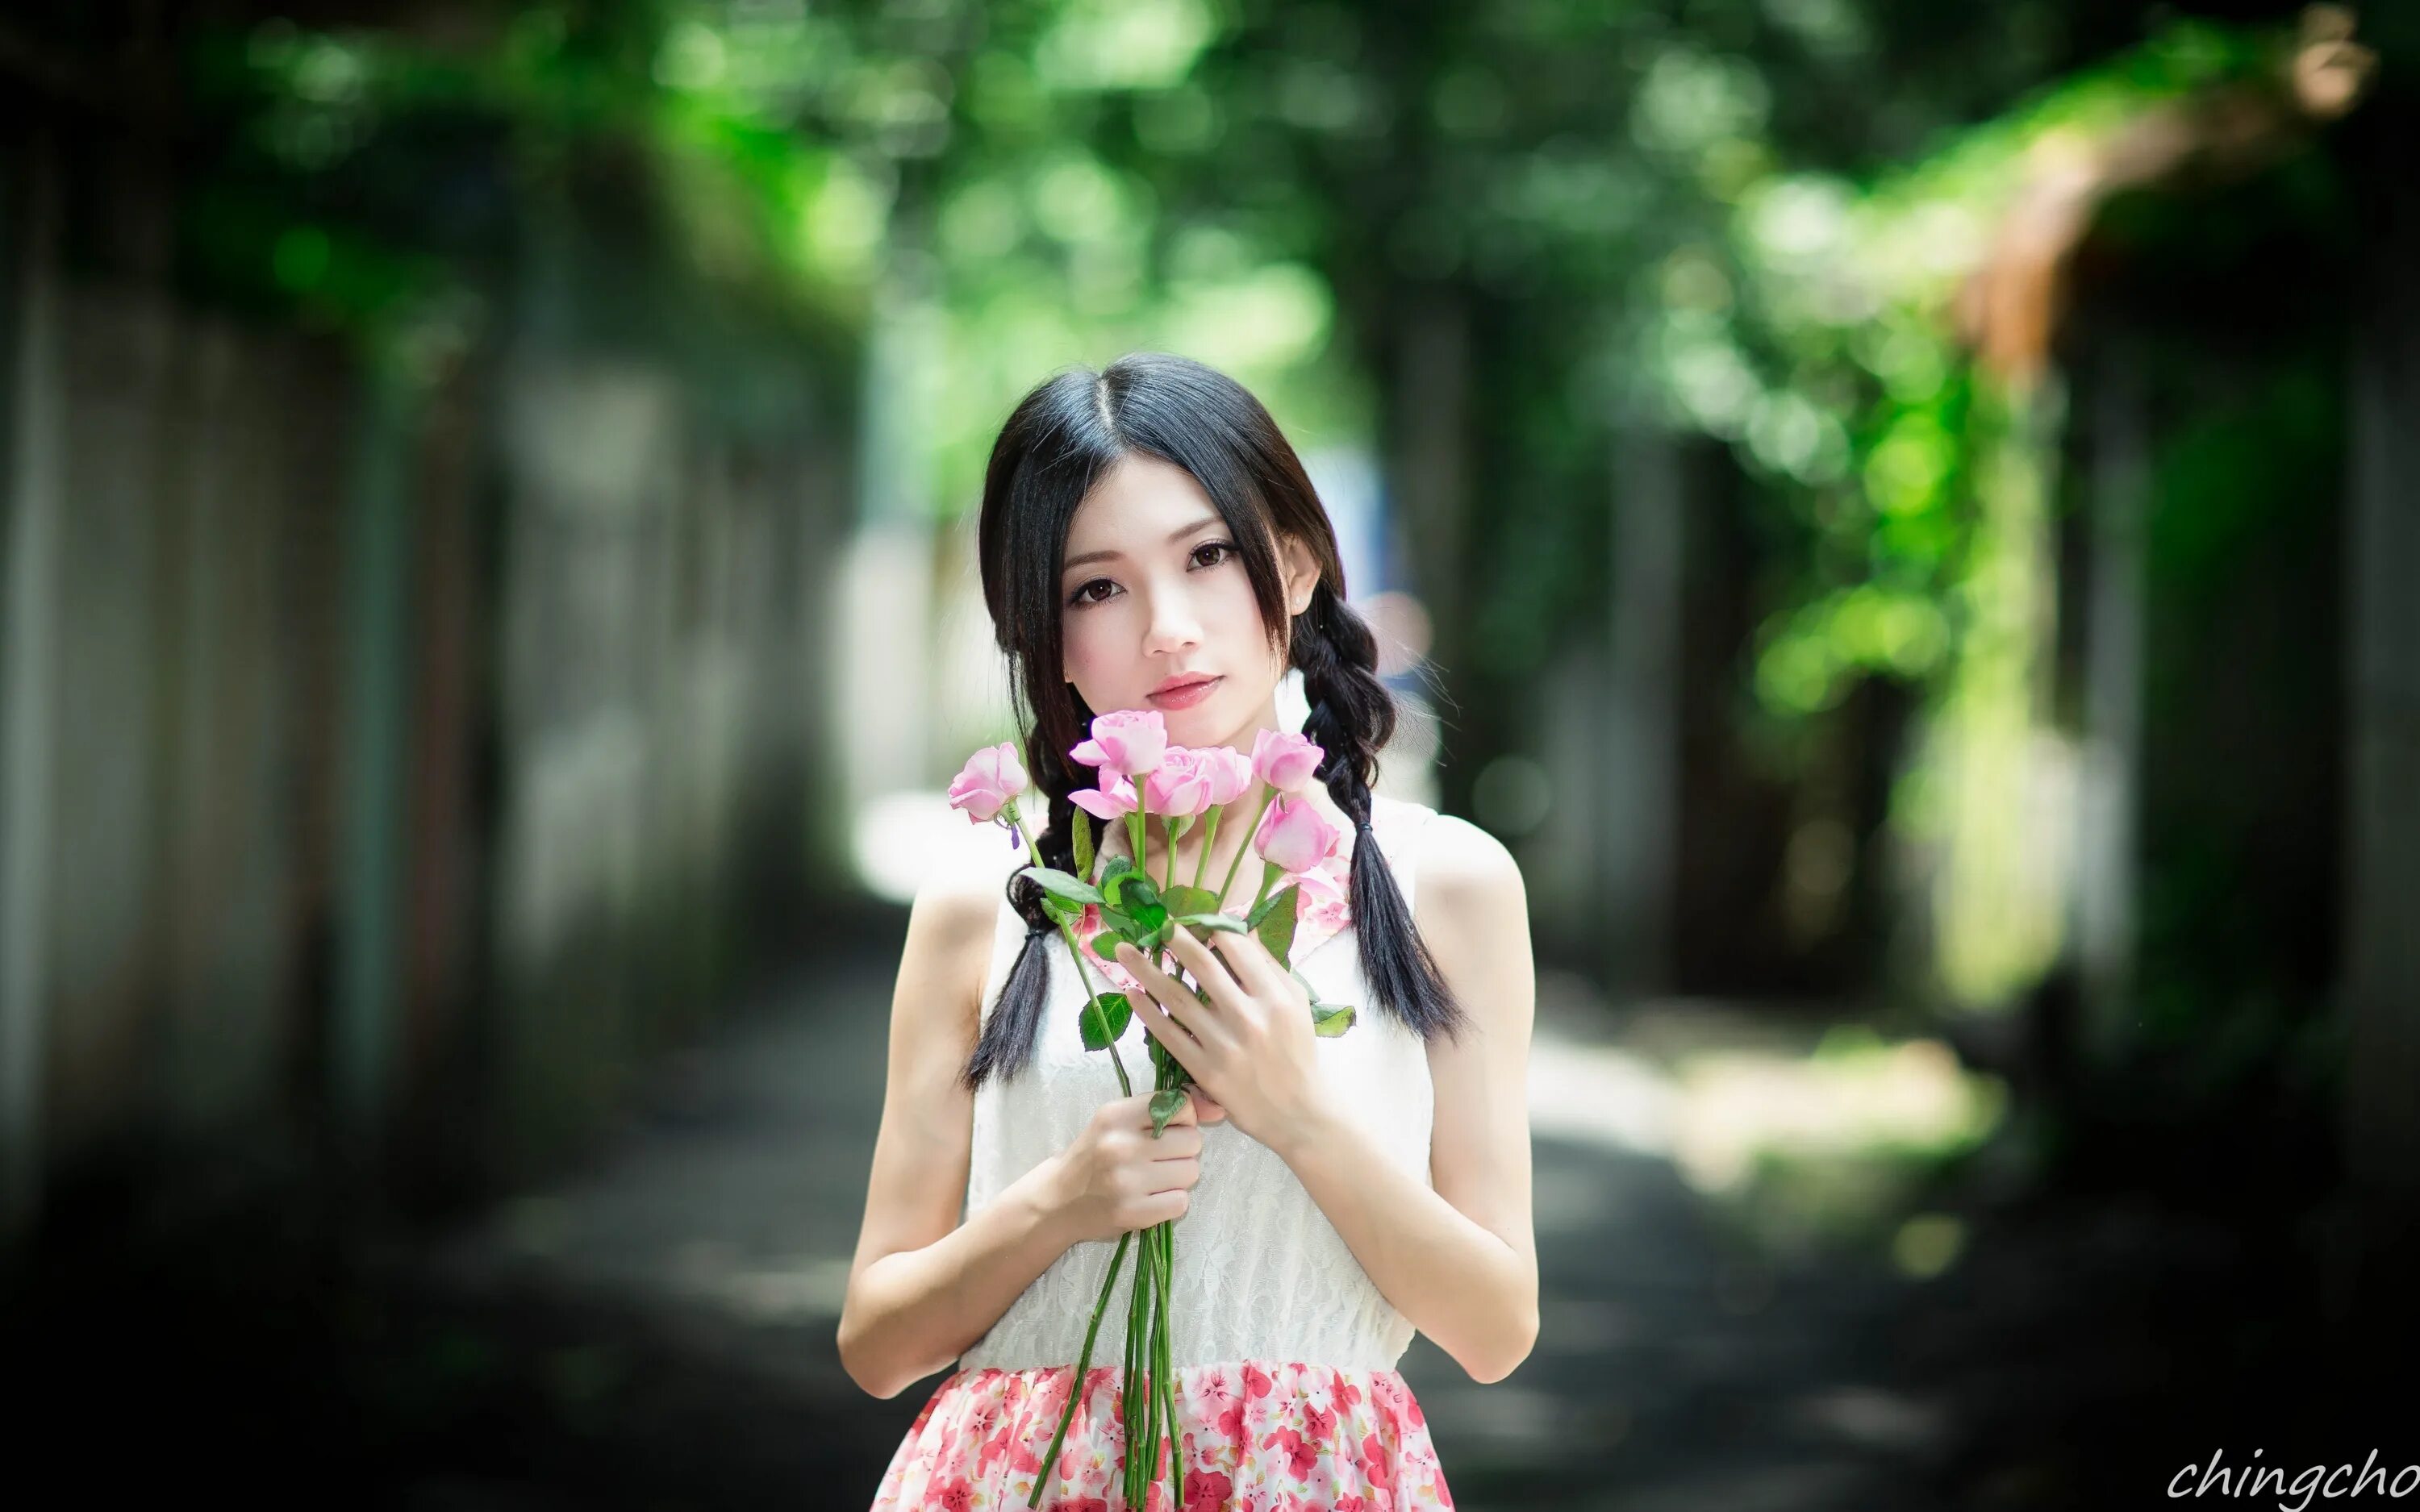 Beautiful girls love juan. Азиатские девушки. Красивые азиатки. Япония девушки. Девушка с цветами.